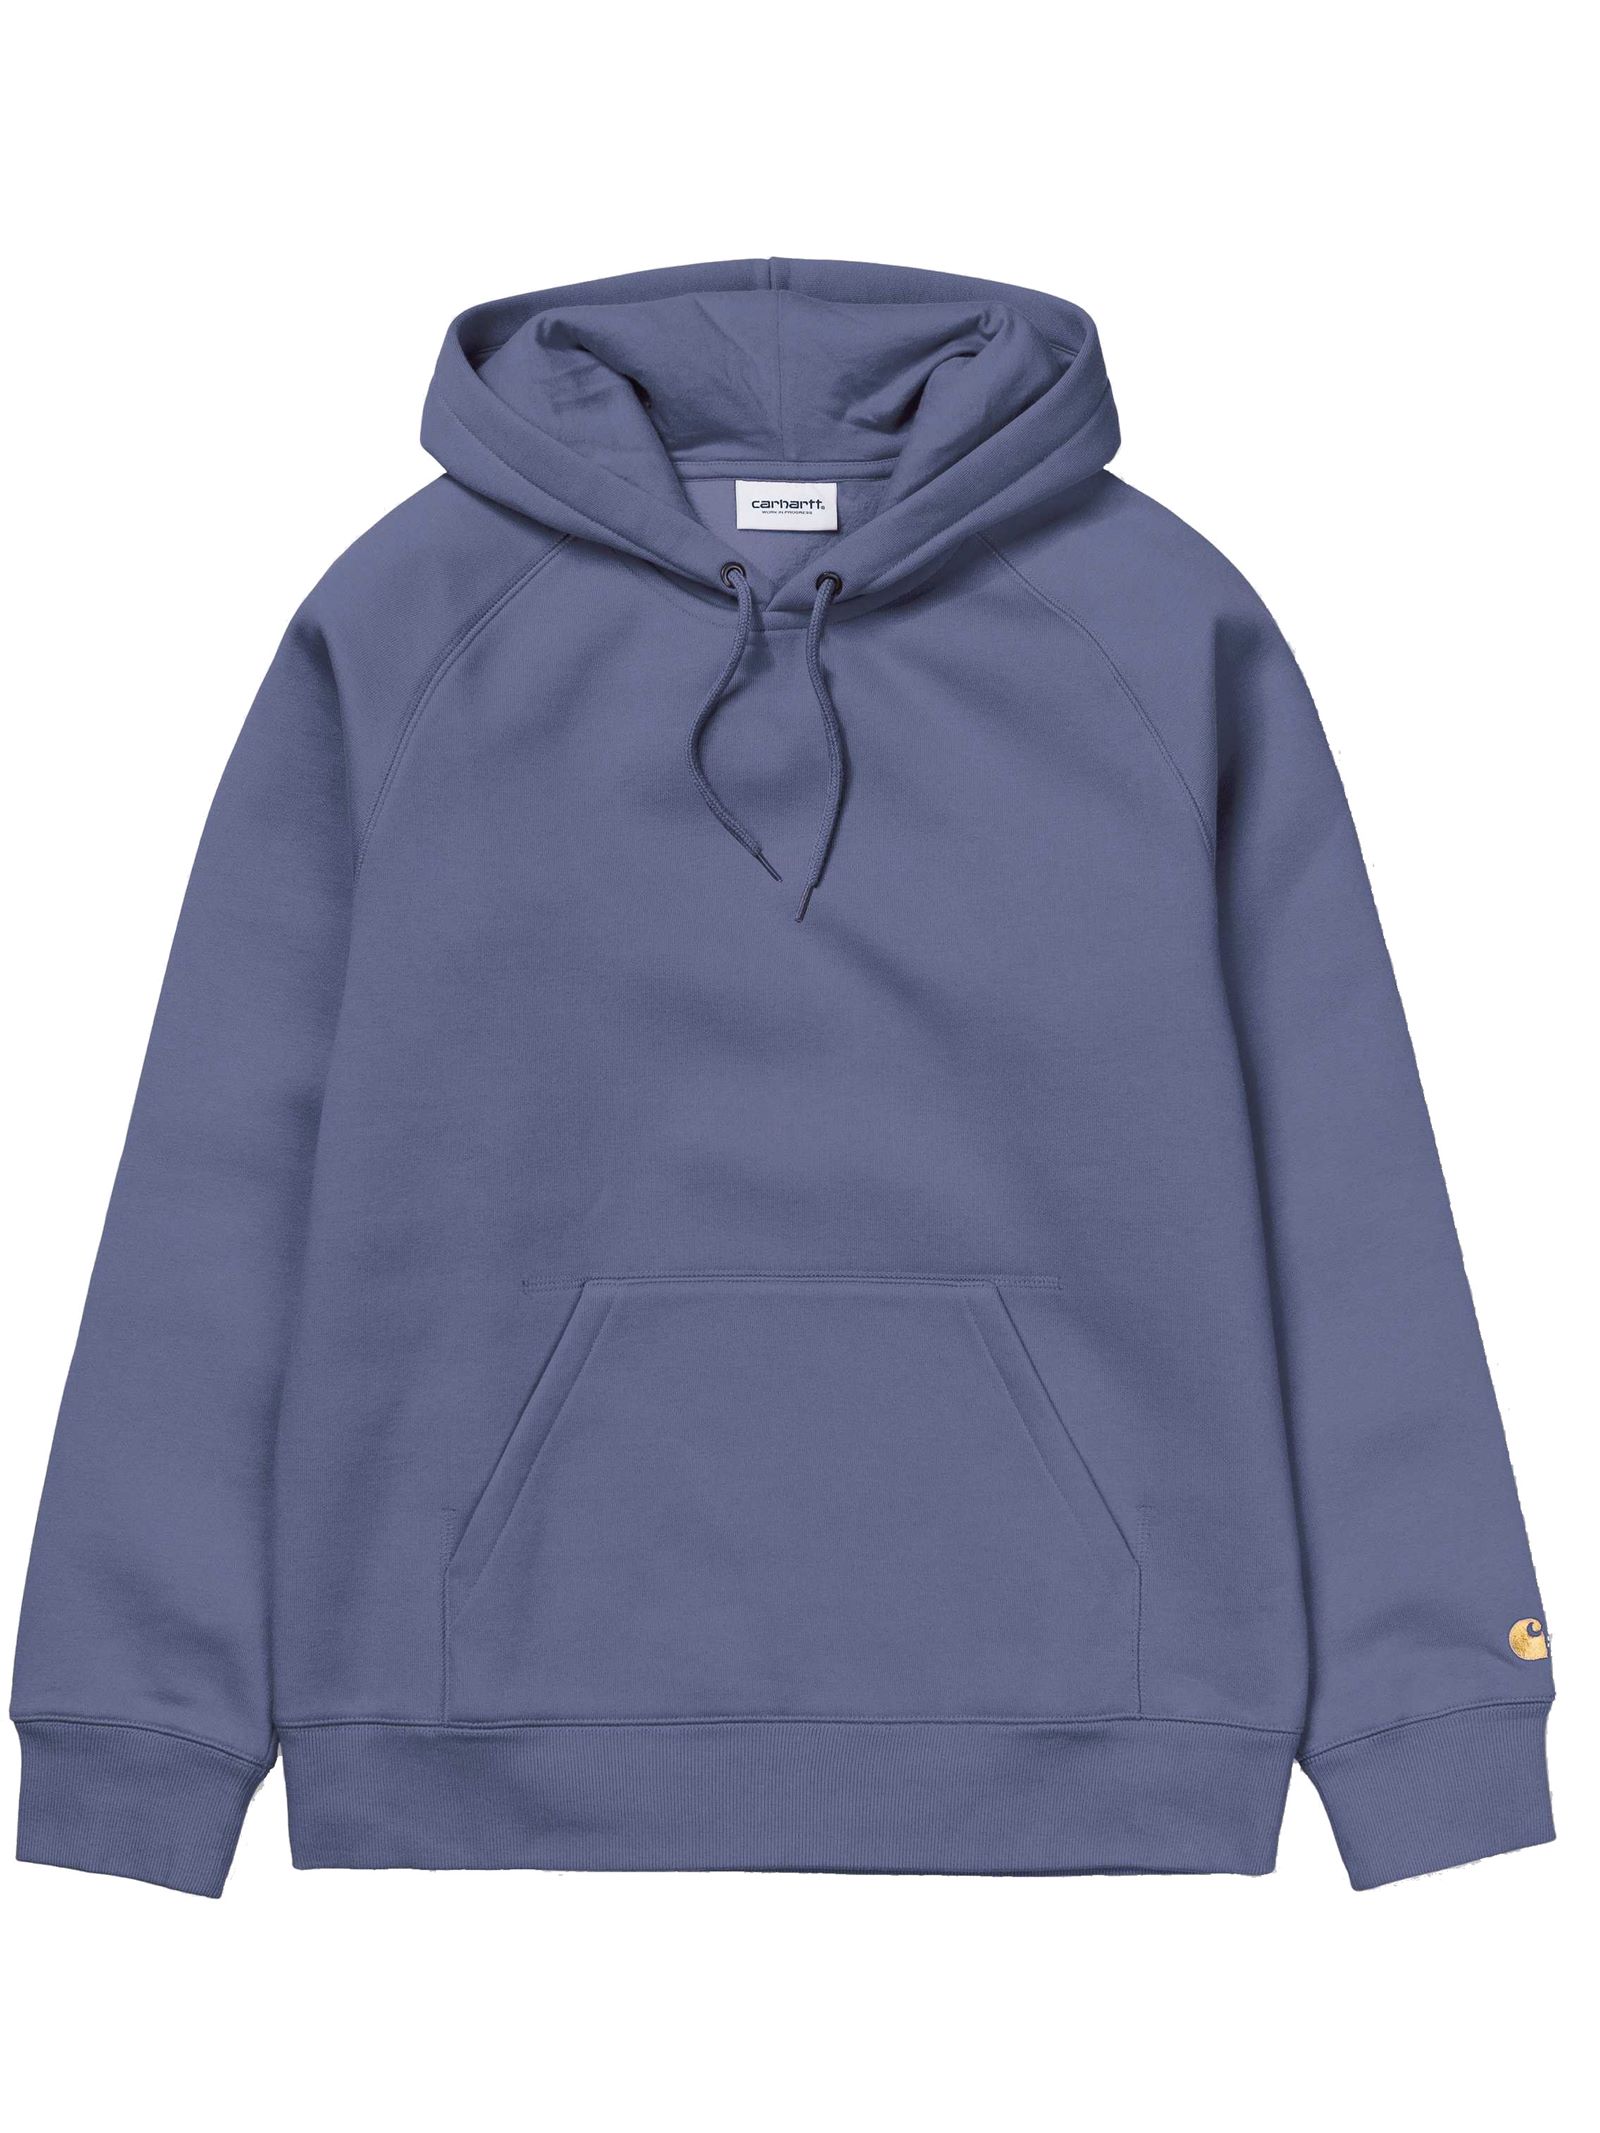 Carhartt WIP Chase Hooded Sweatshirt in Cold Viola/Gold | Dapper Street